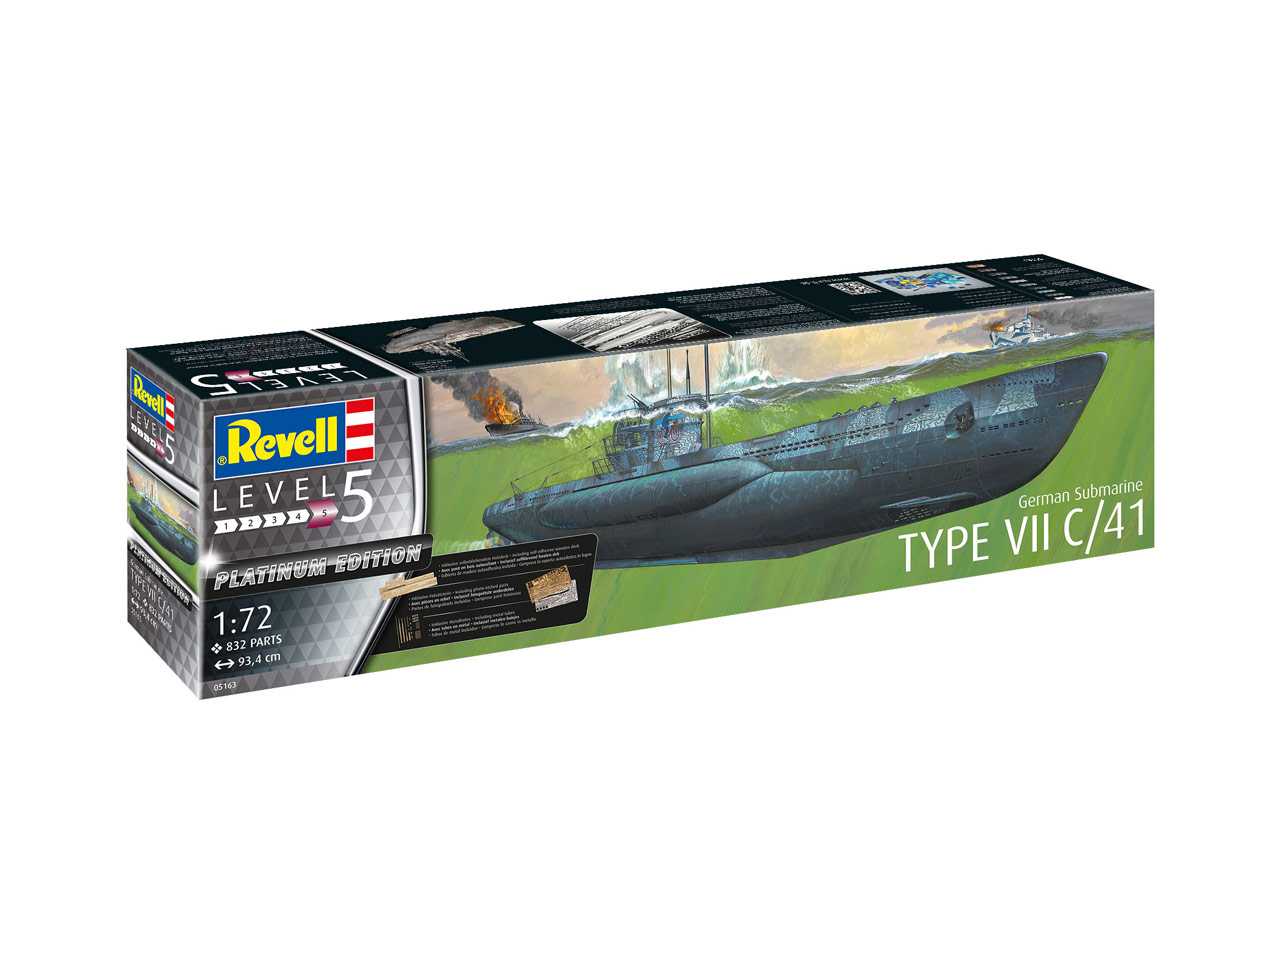 Fotografie Plastic ModelKit ponorka Limited Edition 05163 - German Submarine Type VII C/41 (Platinum Edition) (1:72)